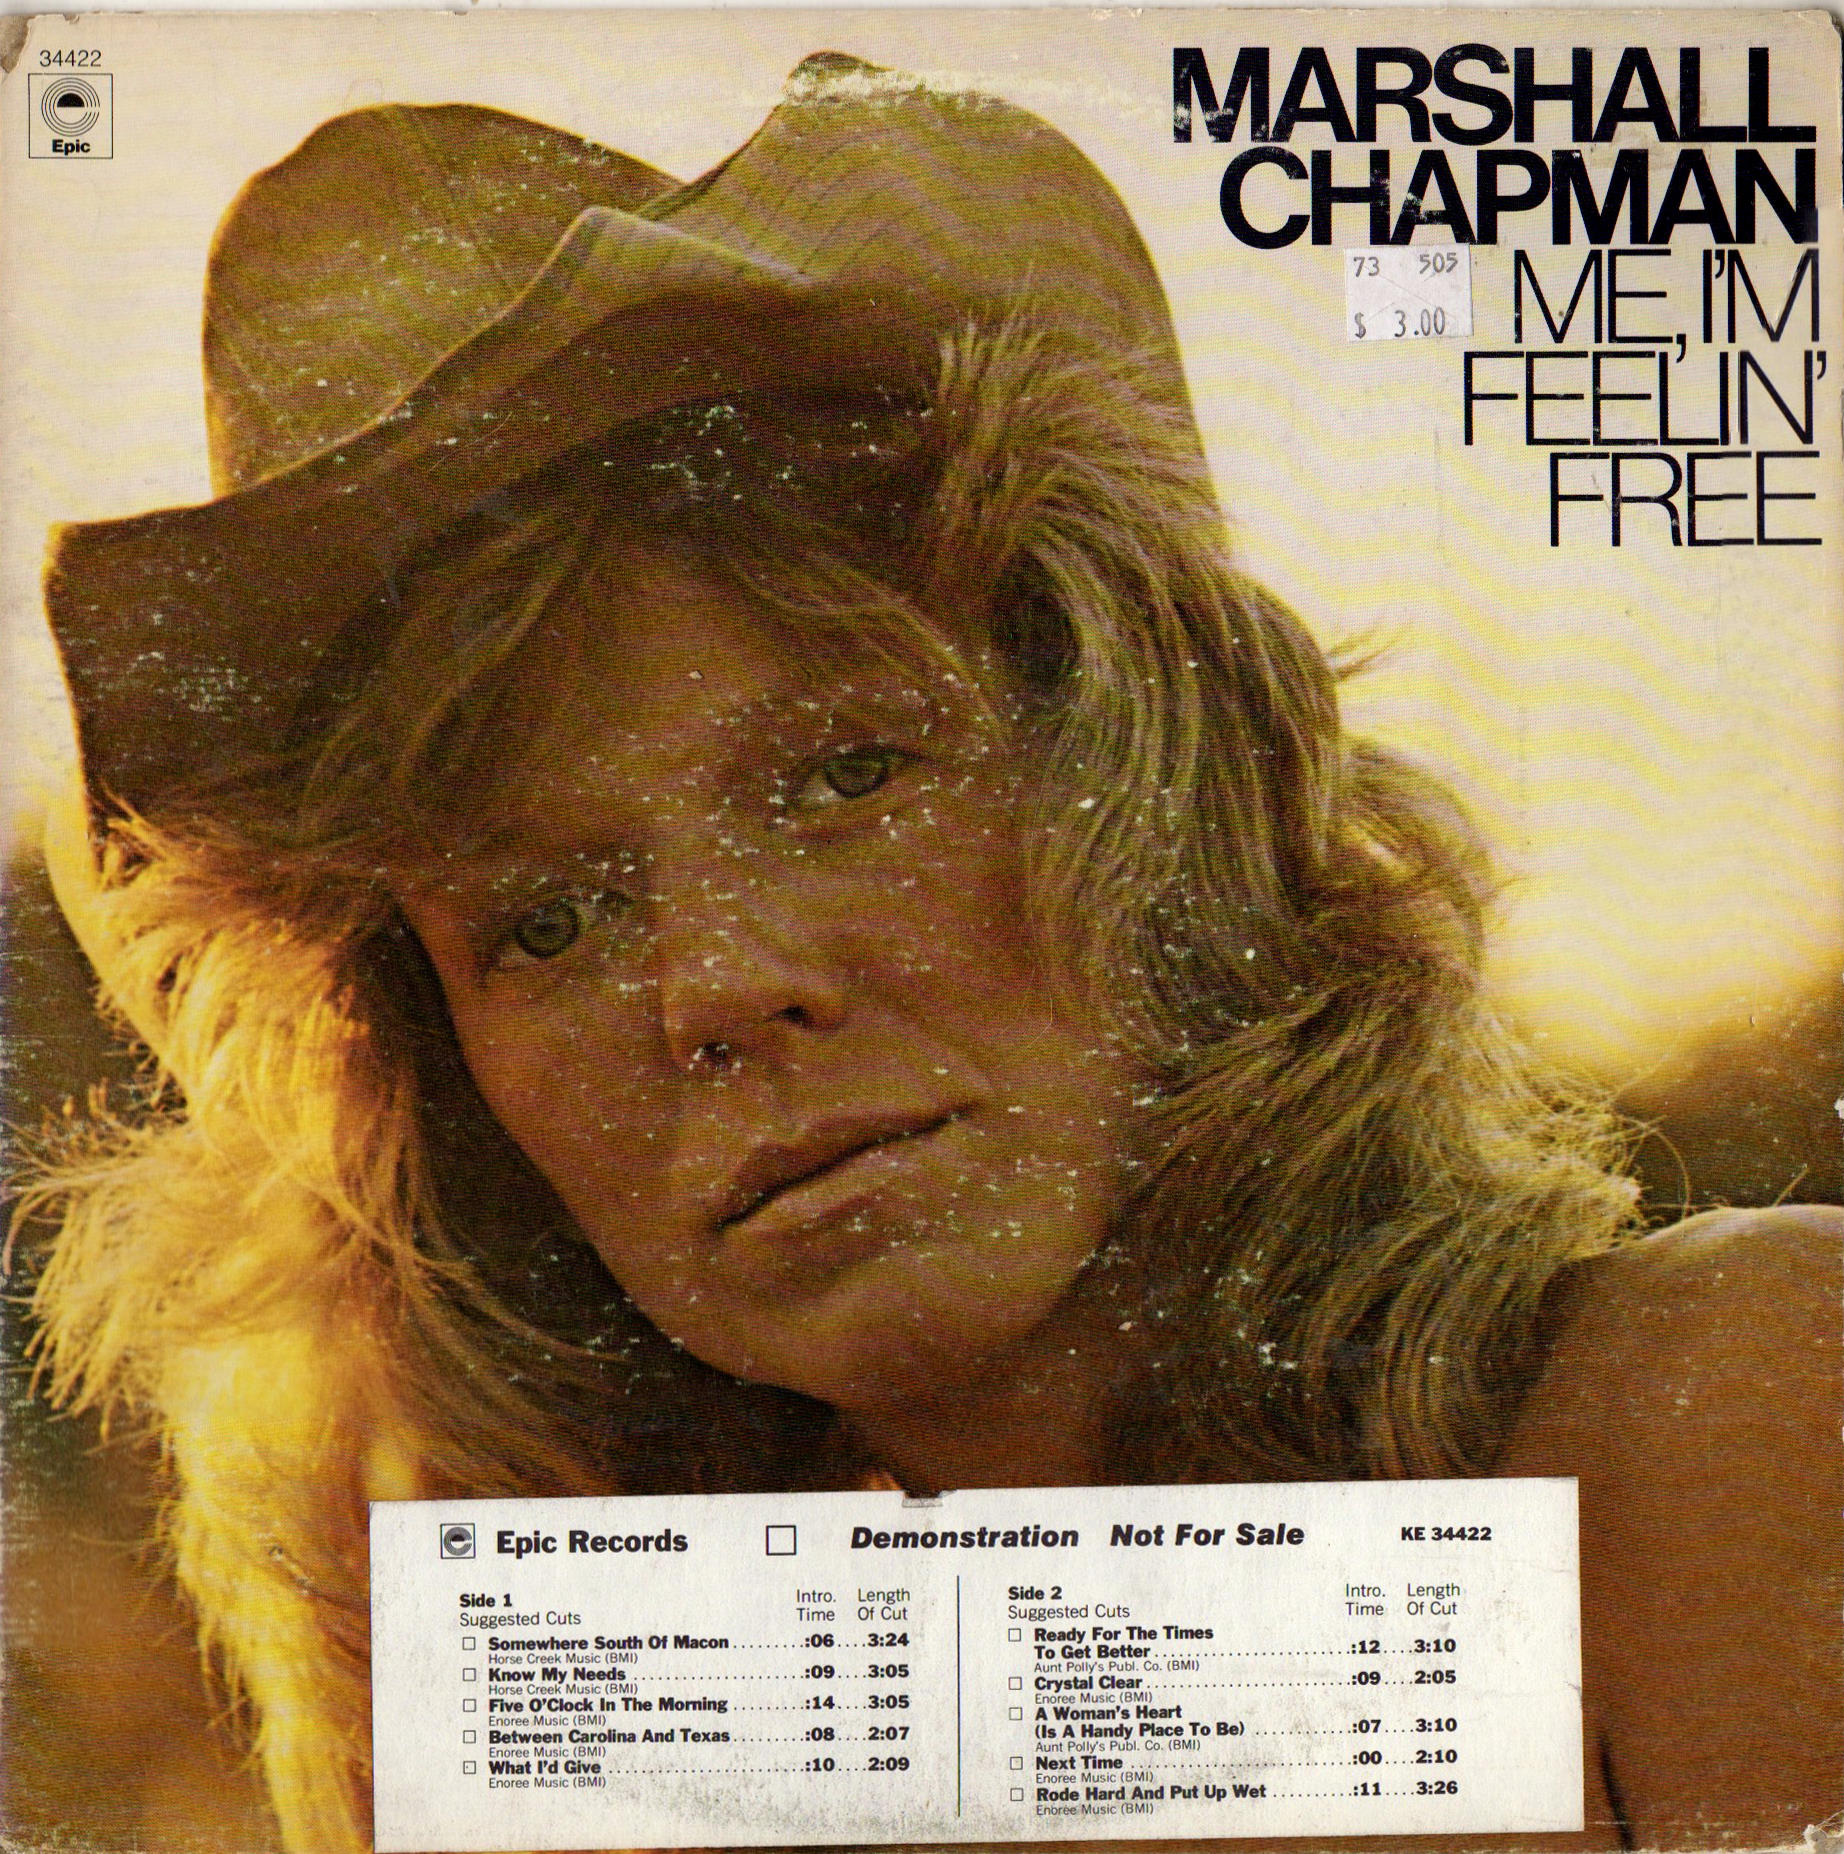 Marshall Chapman Epic LP Me I'm Feelin' Free